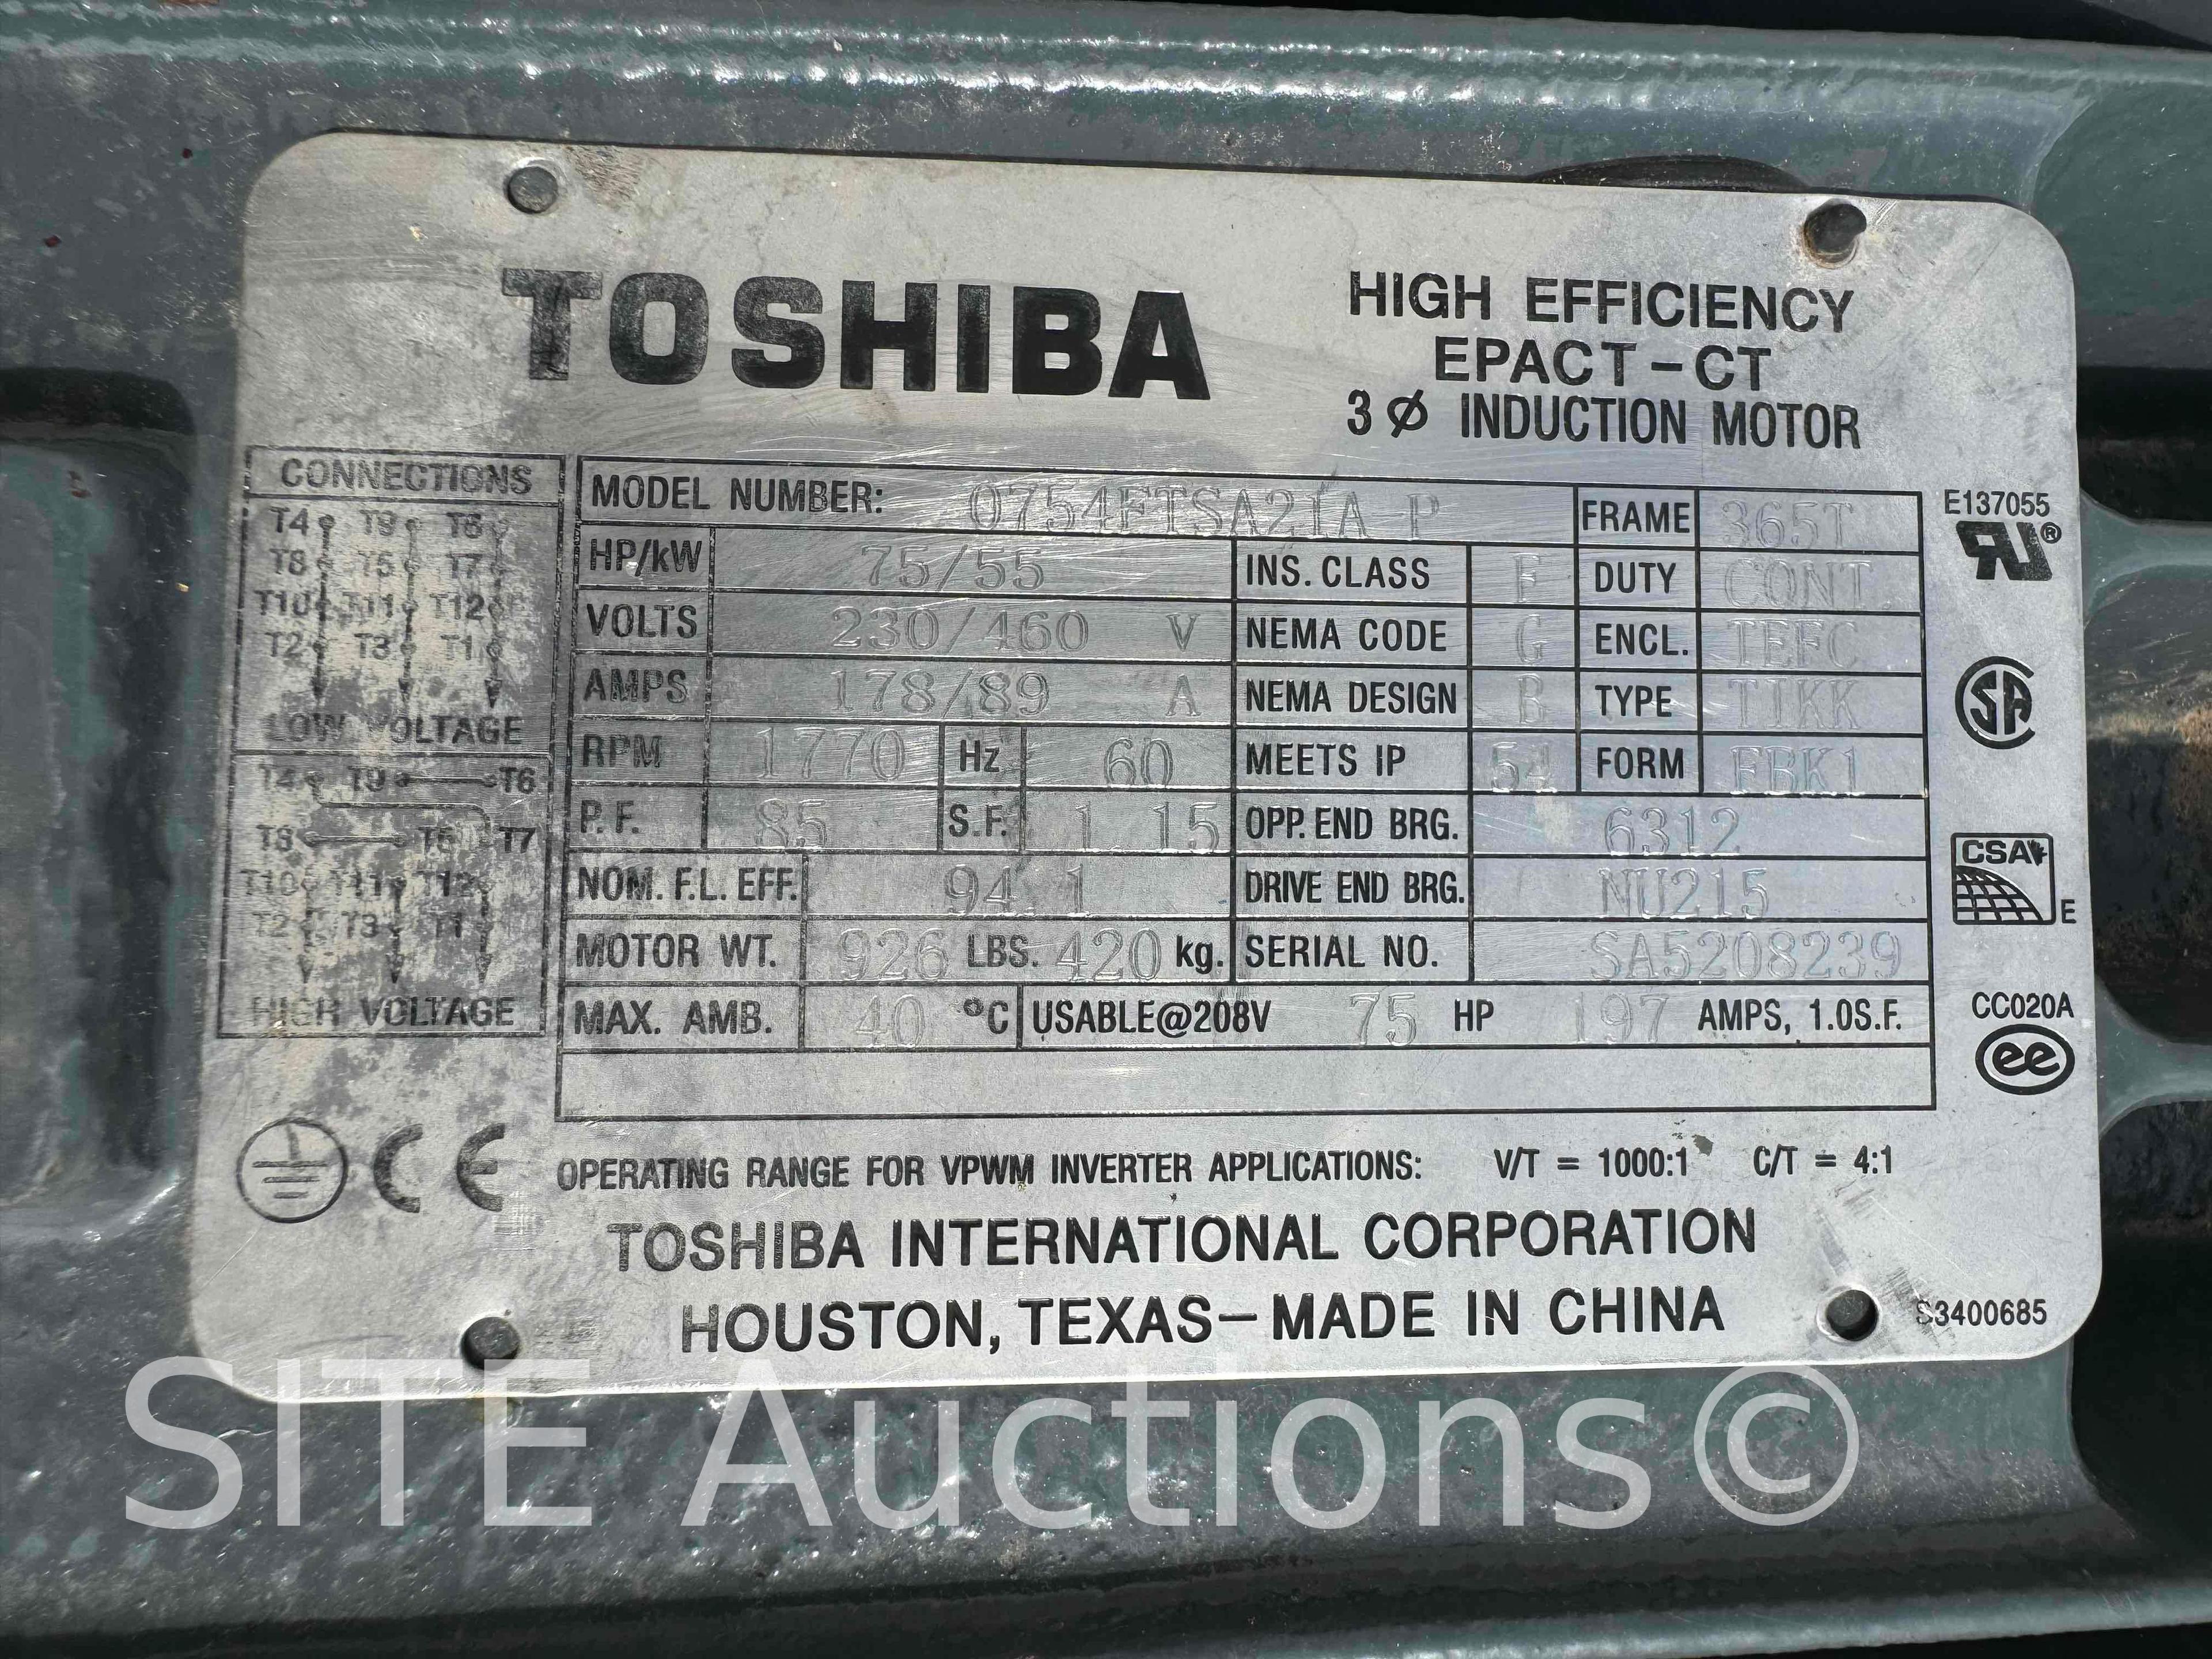 Toshiba 75HP Electric Motor - refurbished